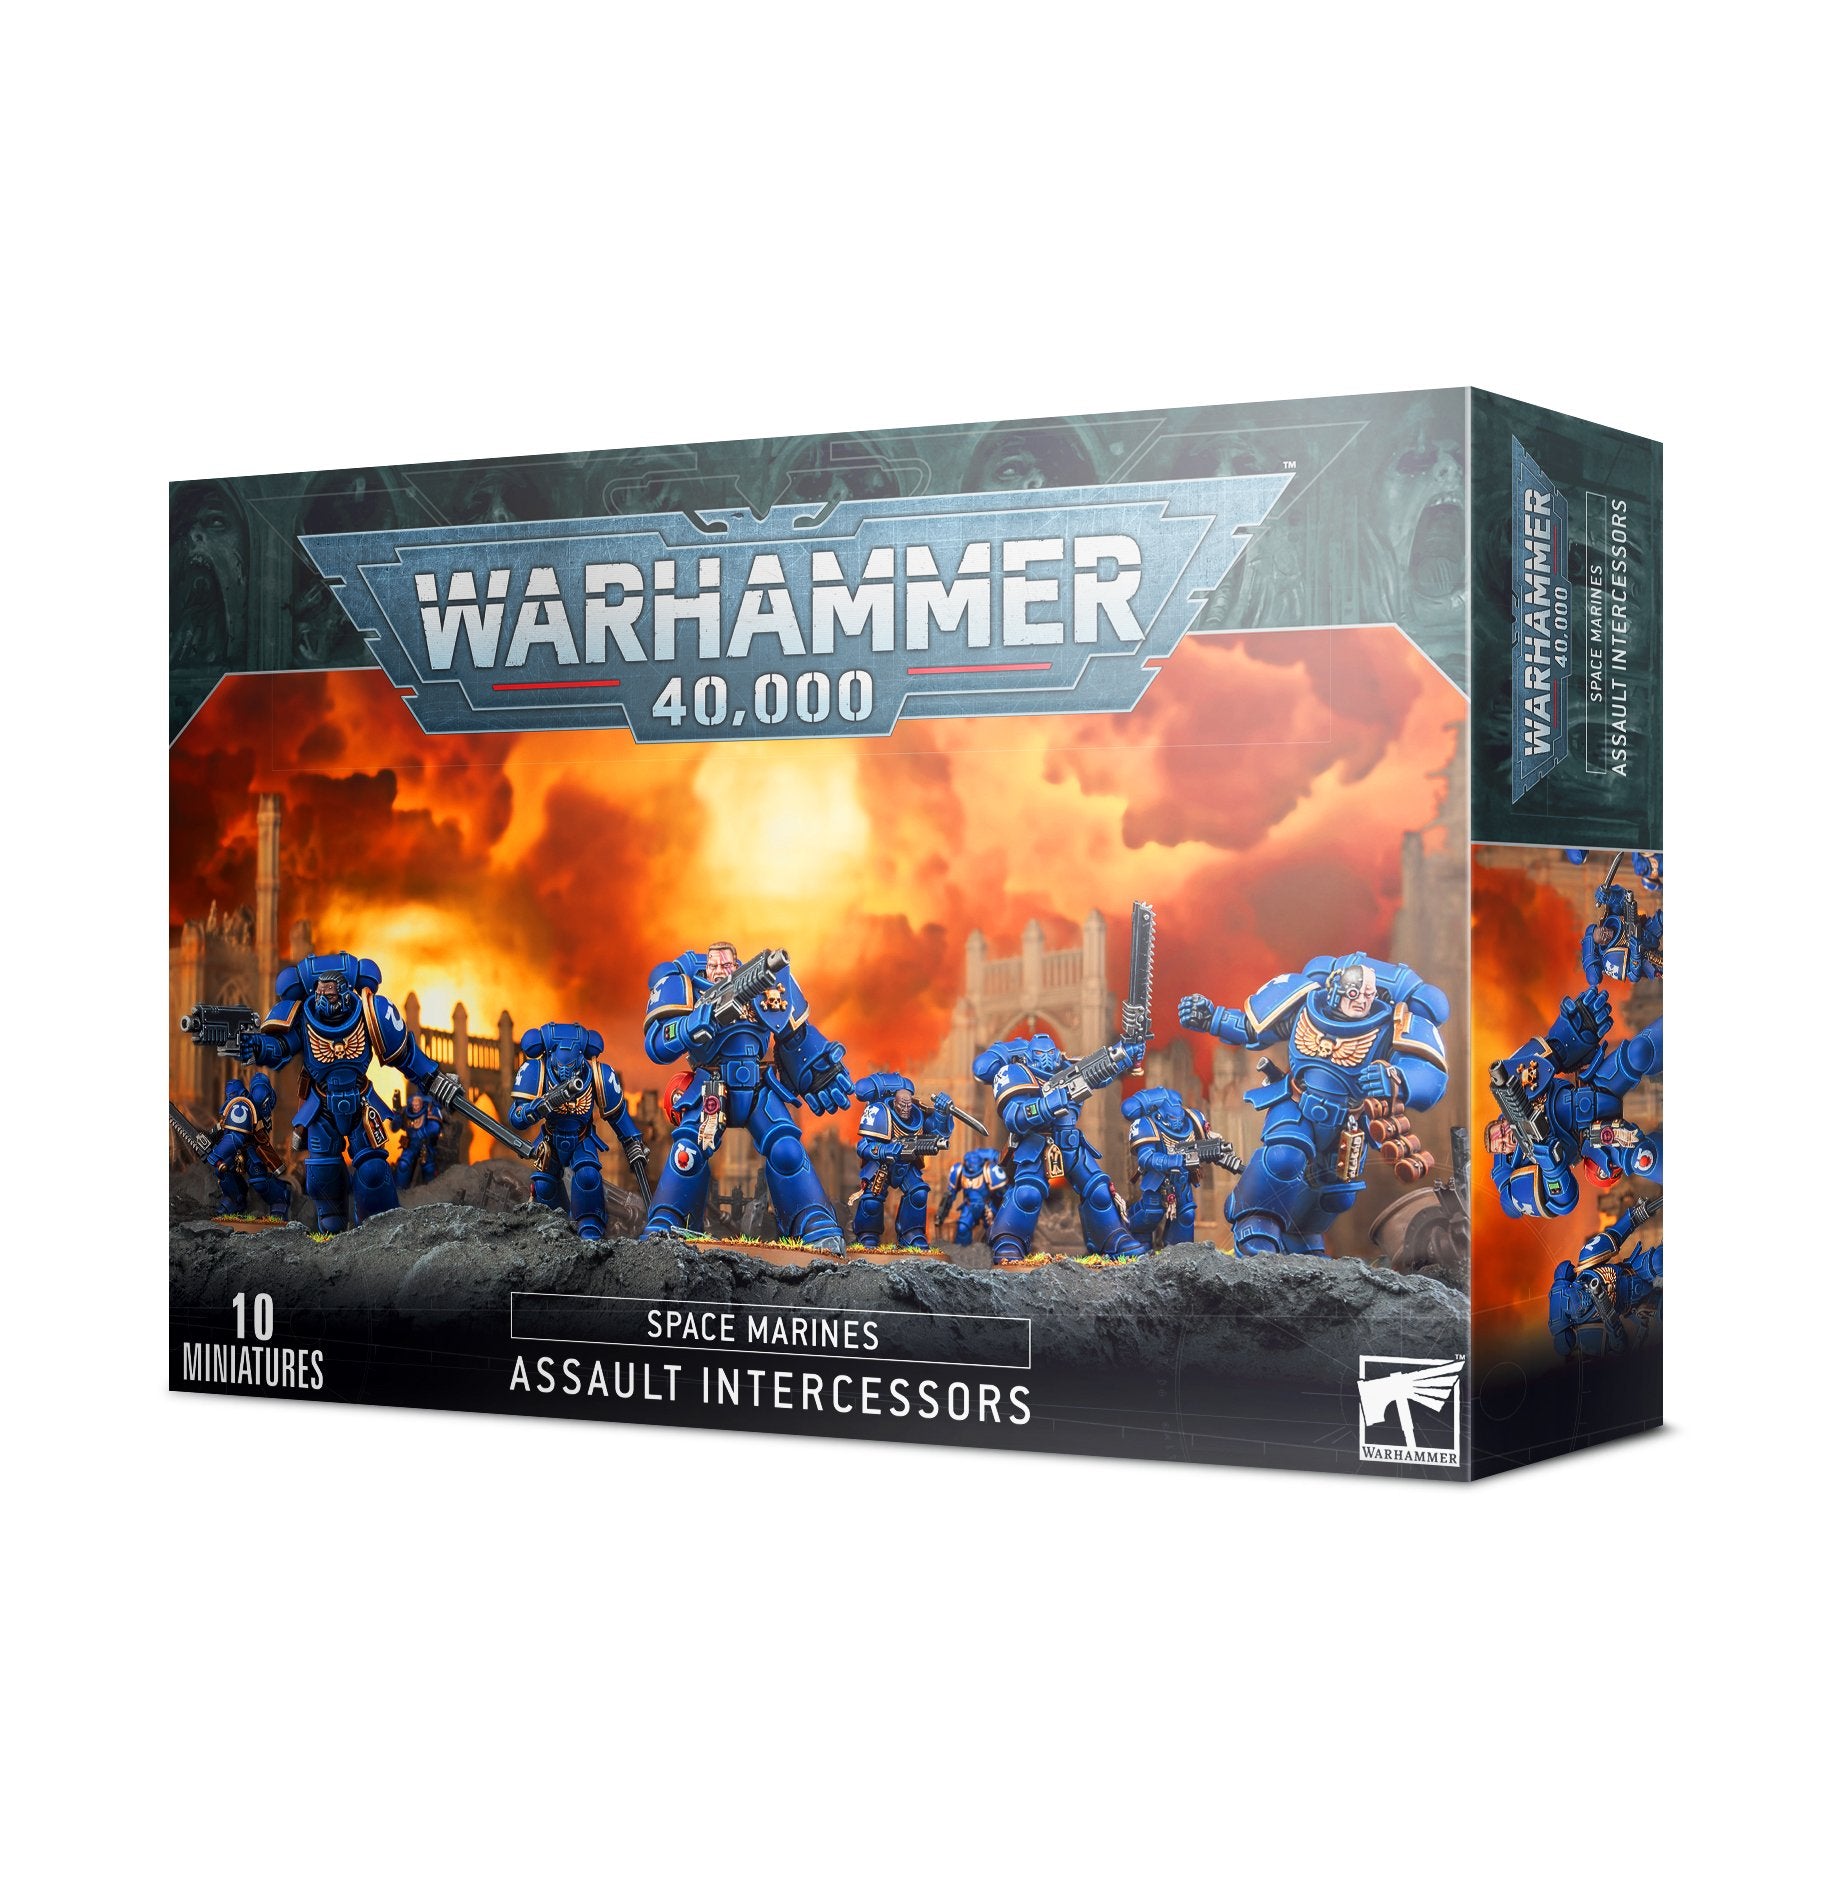 Space-marine-assault-intercessors-warhammer-40K tabletop-miniatures-game